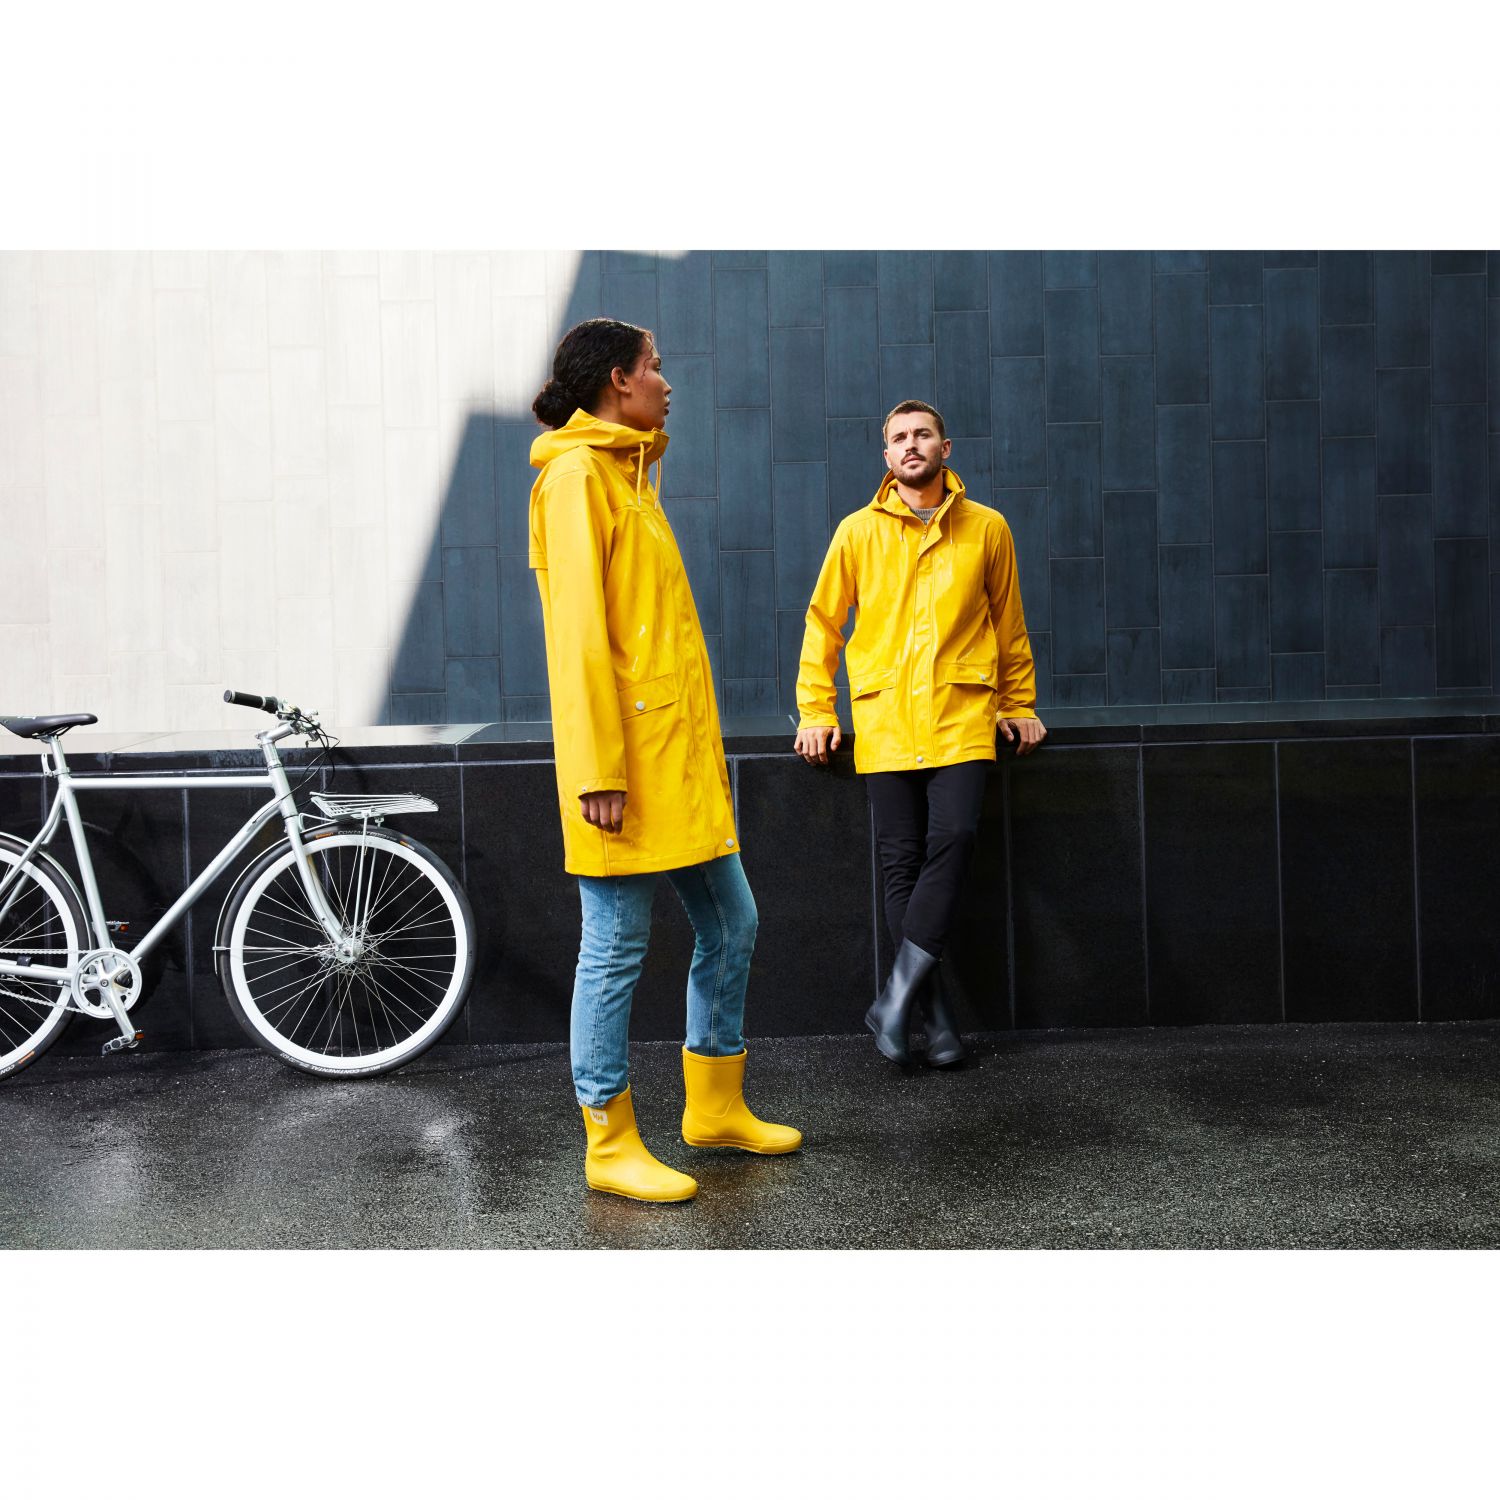 Helly Hansen Nordvik 2, rubber boots, women, essential yellow